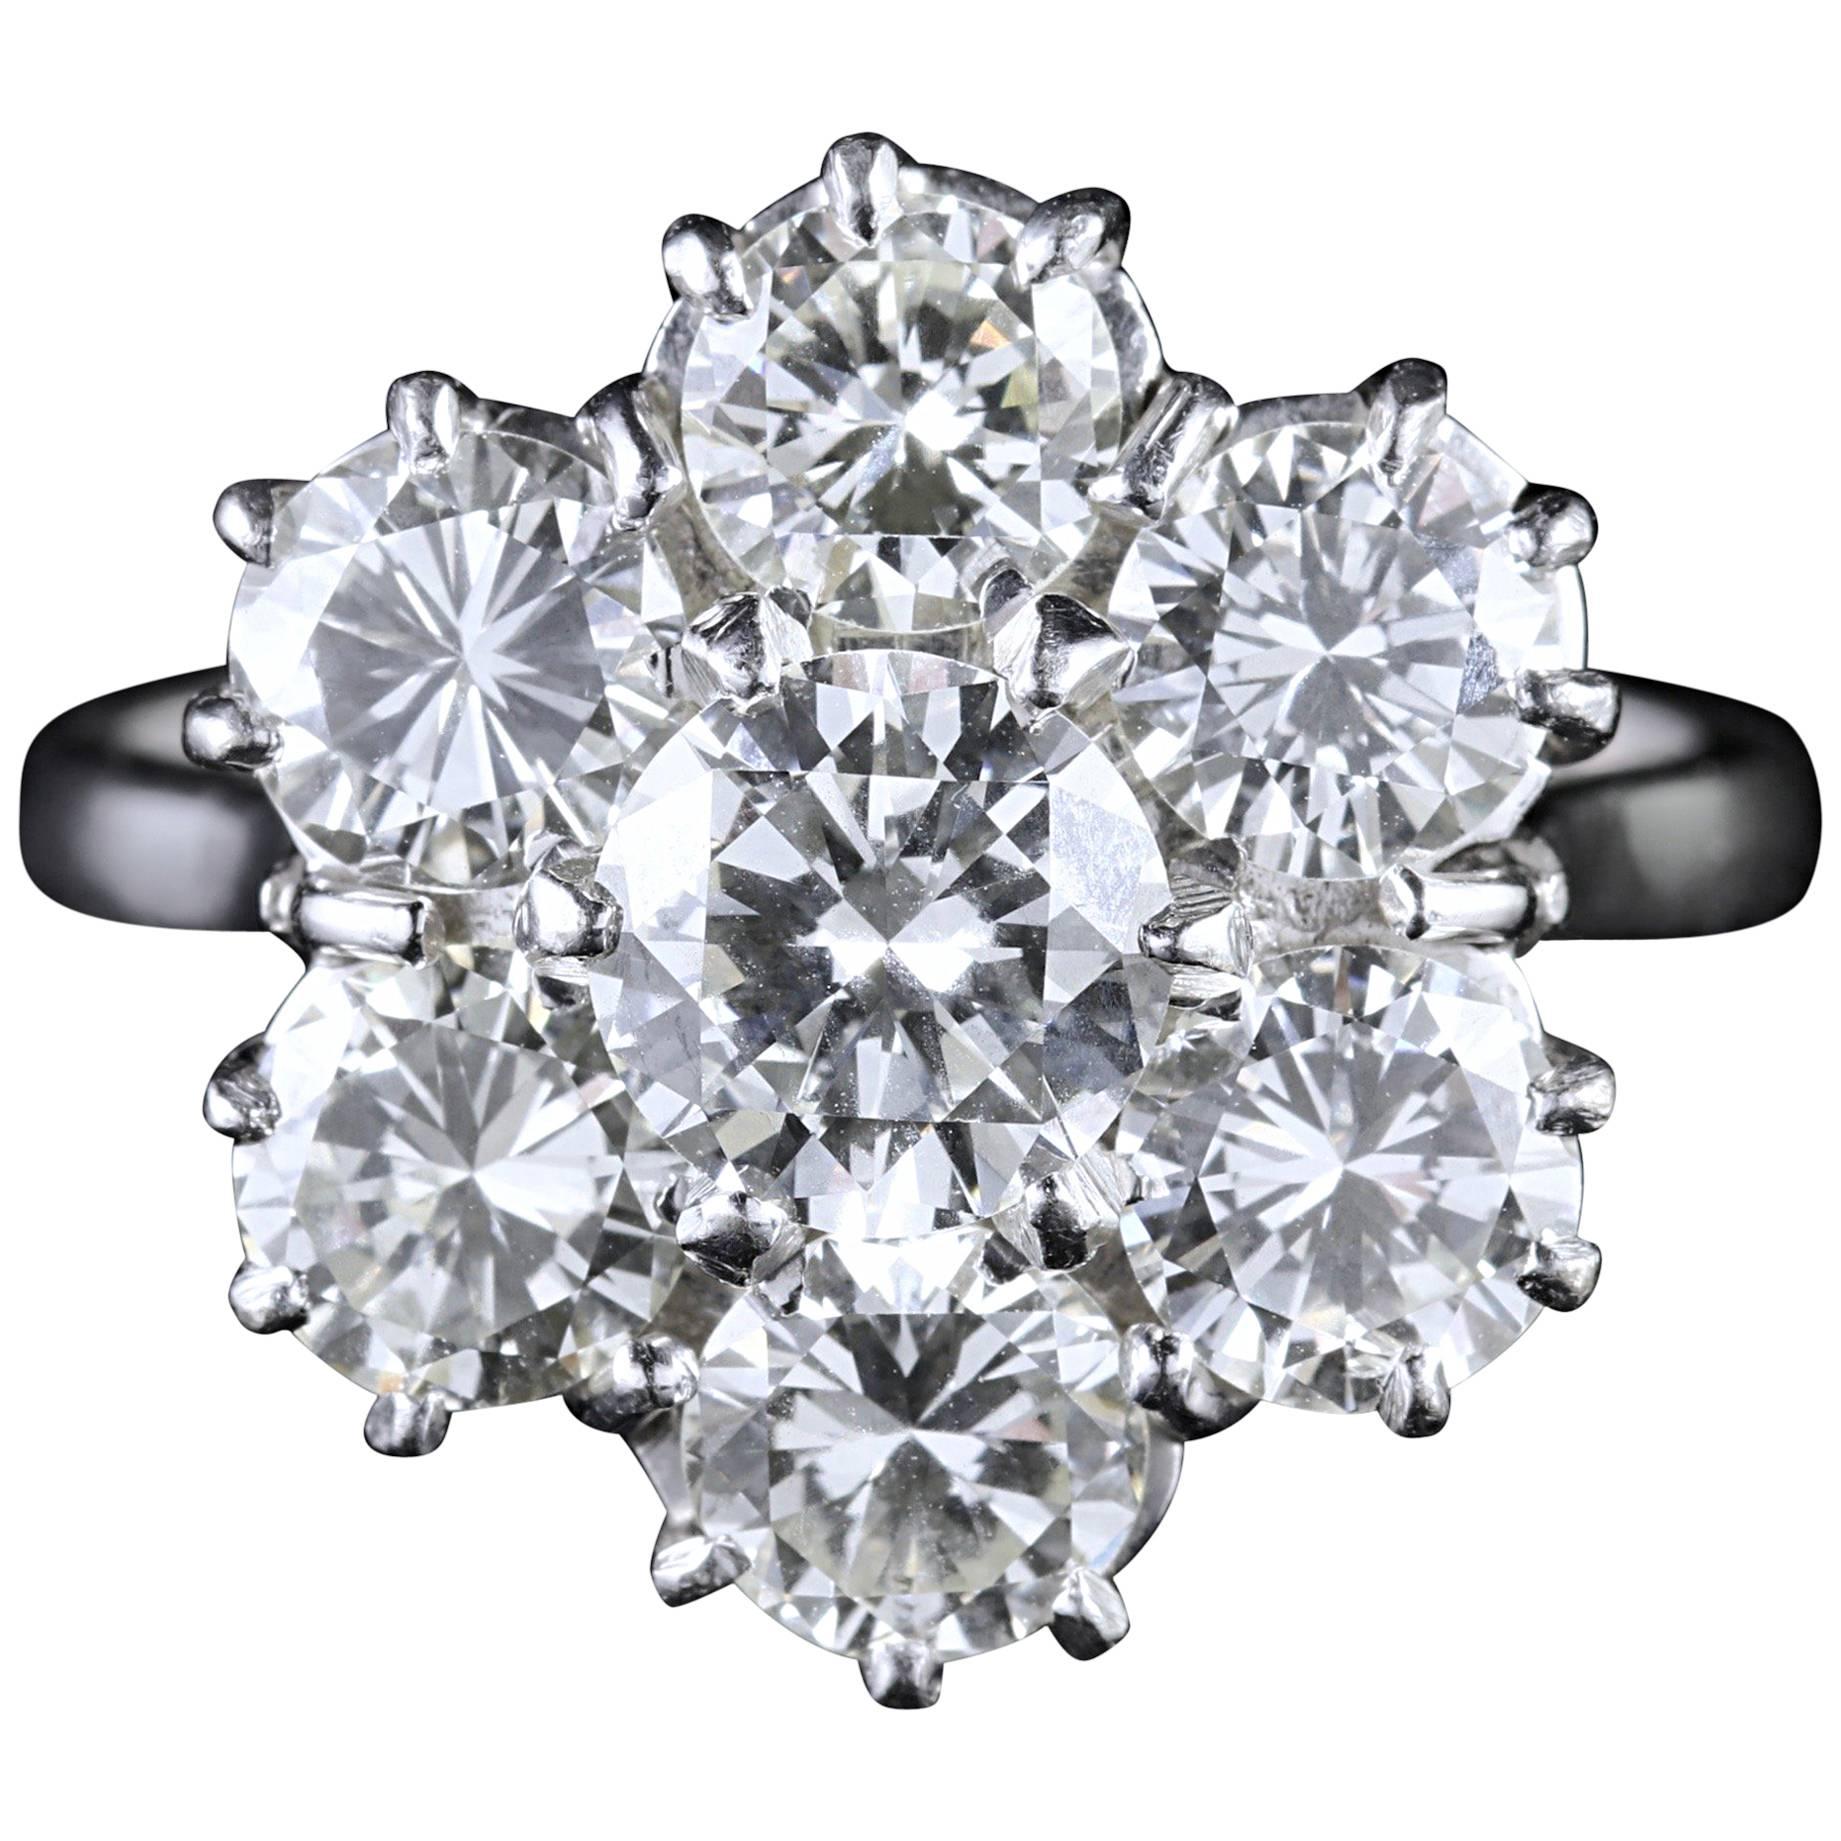  Diamond Cluster Engagement Ring 4 Carat of Diamonds Vs1